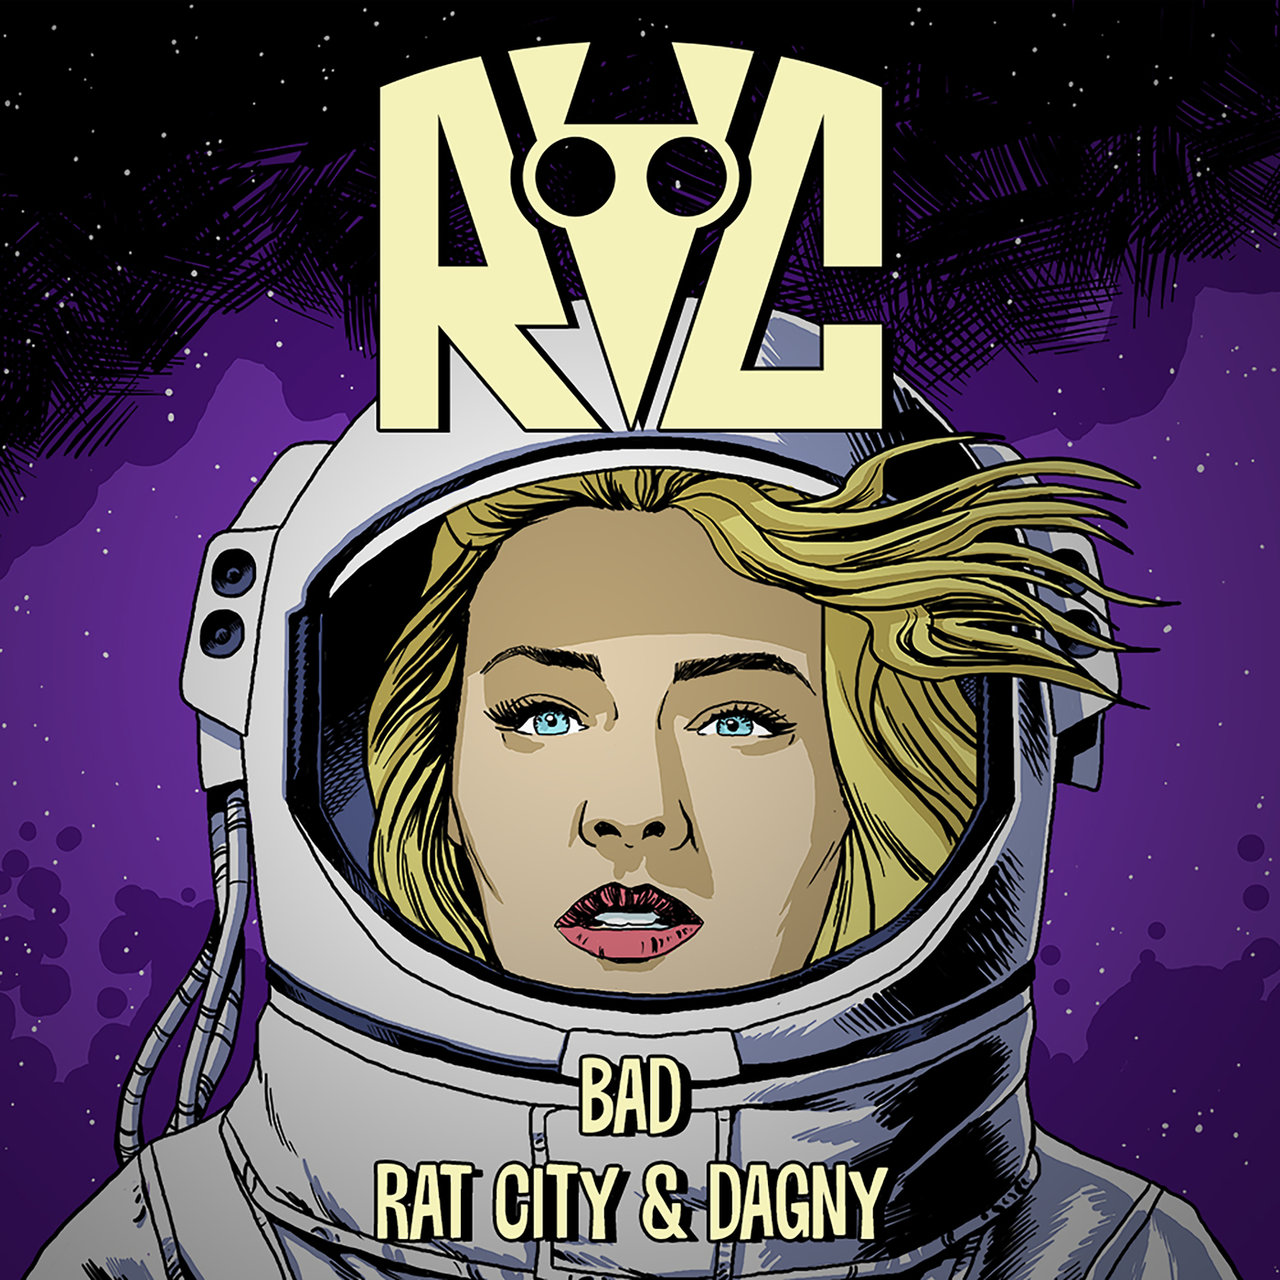 Rat City & Dagny BAD cover artwork